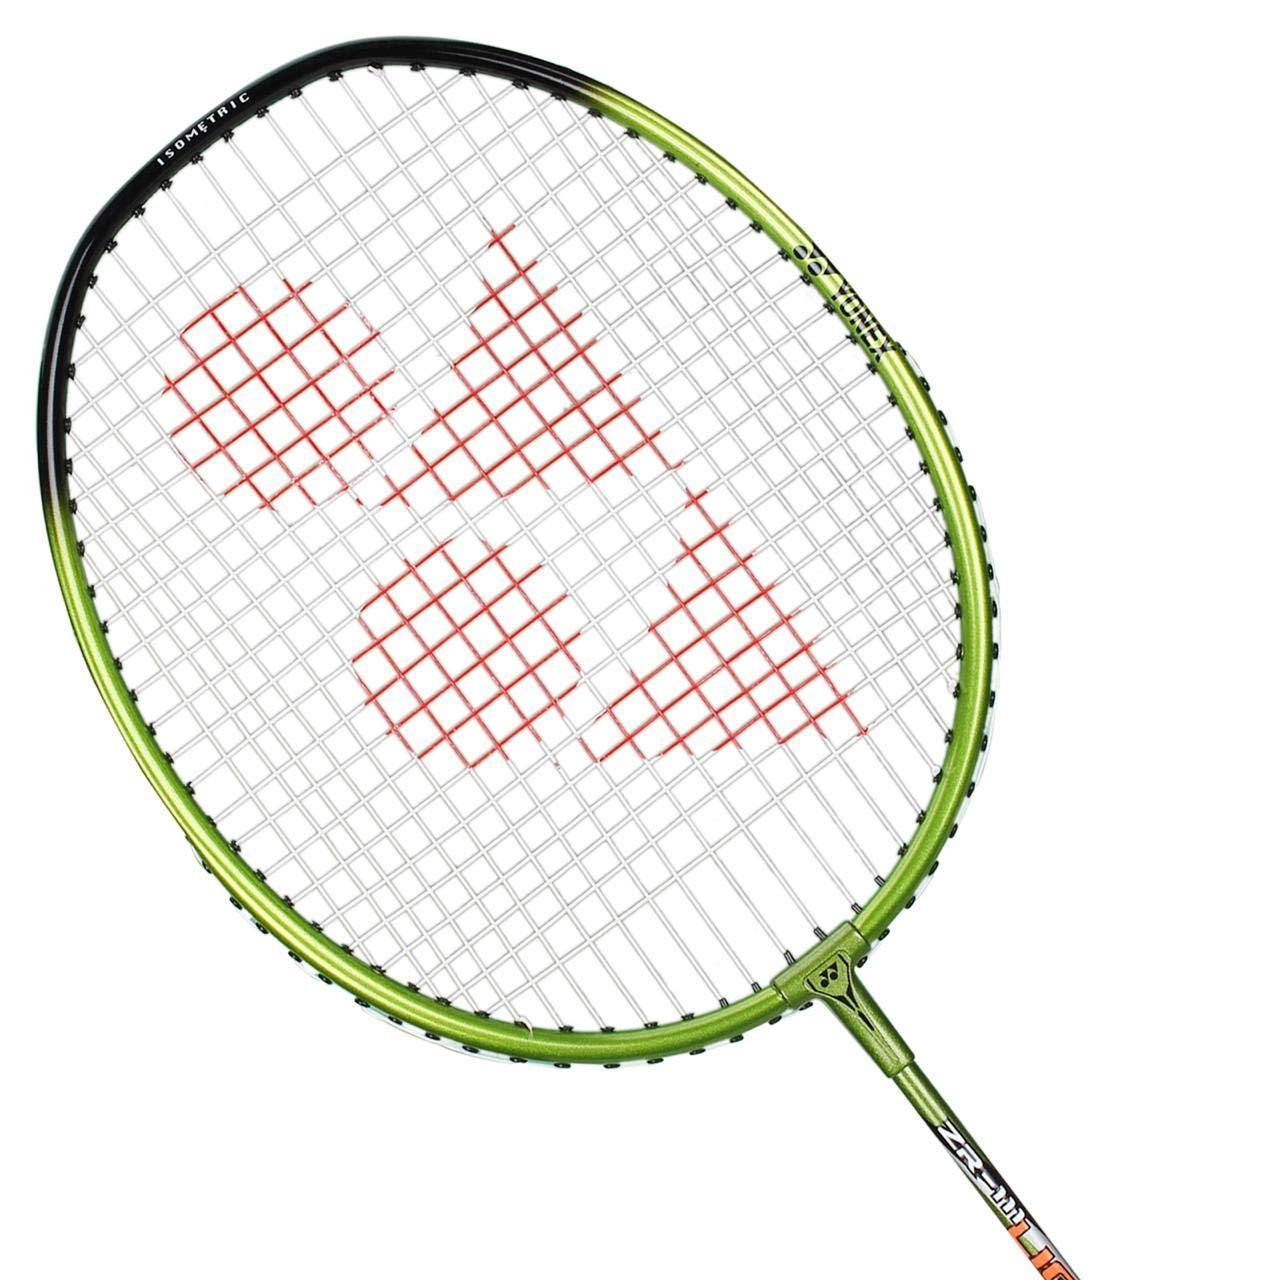 Yonex ZR 111 Light Strung Badminton Racquet, Lime (Full Cover) - Set of 2 Racquets - Best Price online Prokicksports.com